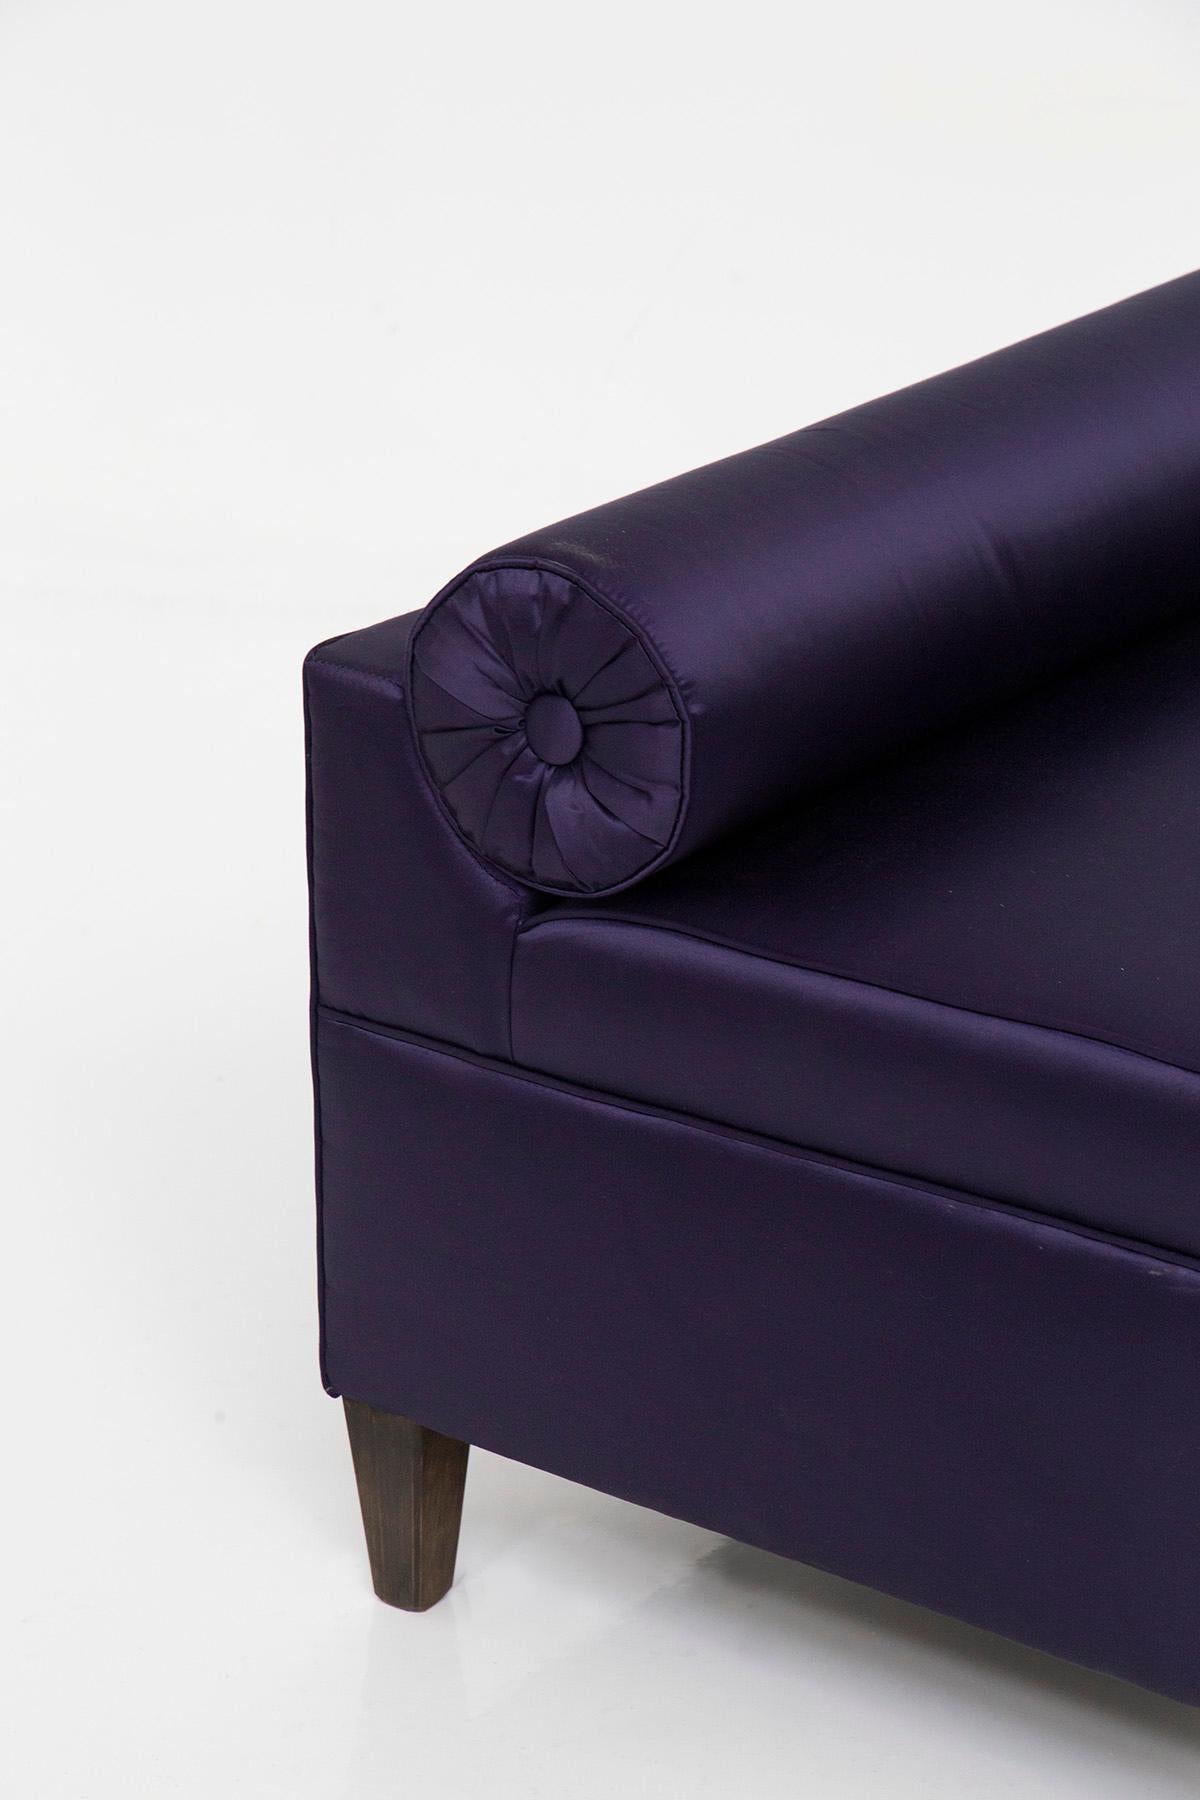 Small Italian Purple Satin Sofa with Roll Cushion For Sale 2